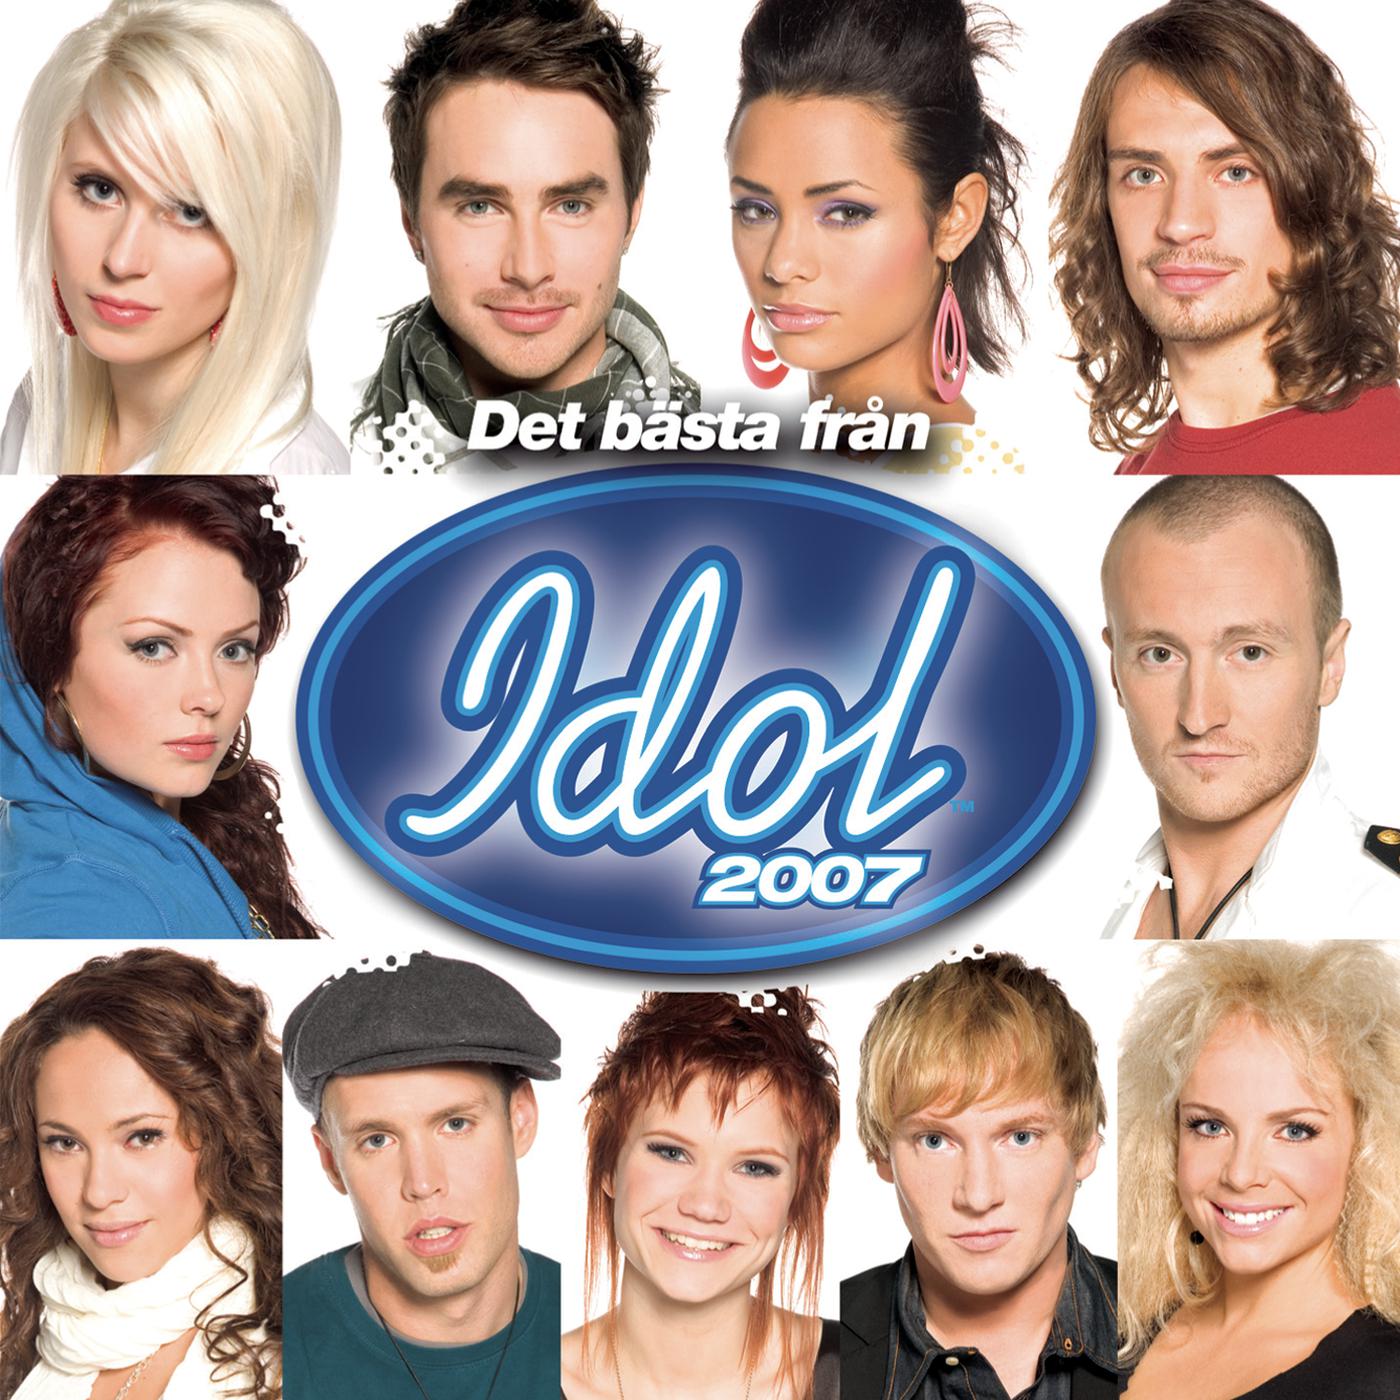 Swedish Idol 2007 Allstars - Free Your Mind